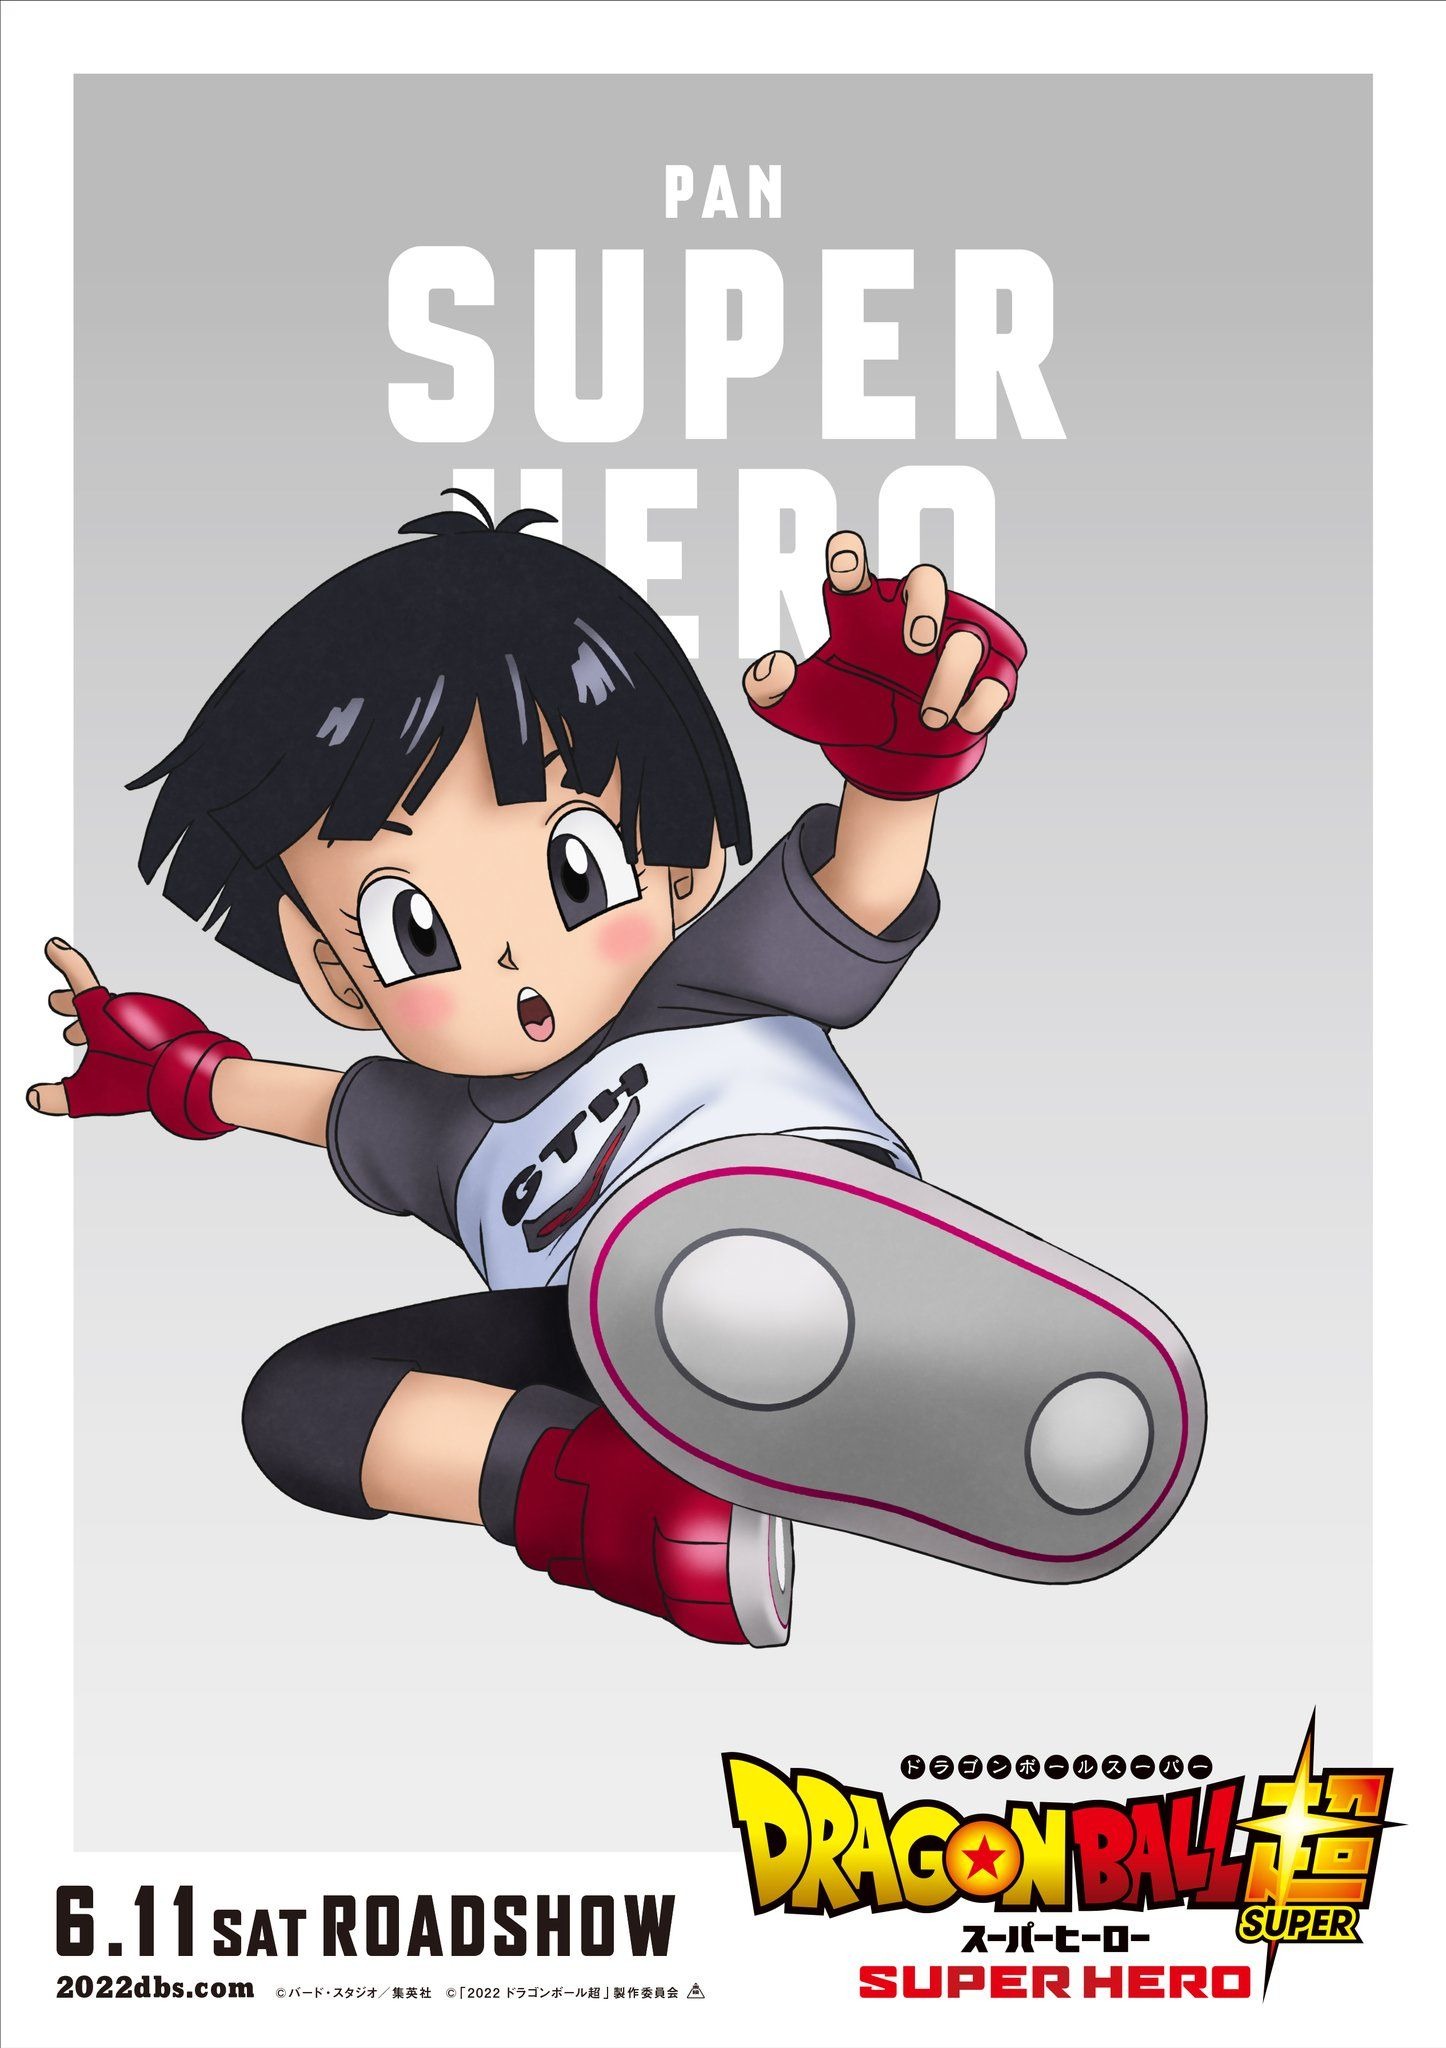 Mega Sized Movie Poster Image for Doragon boru supa supa hiro (#8 of 11)